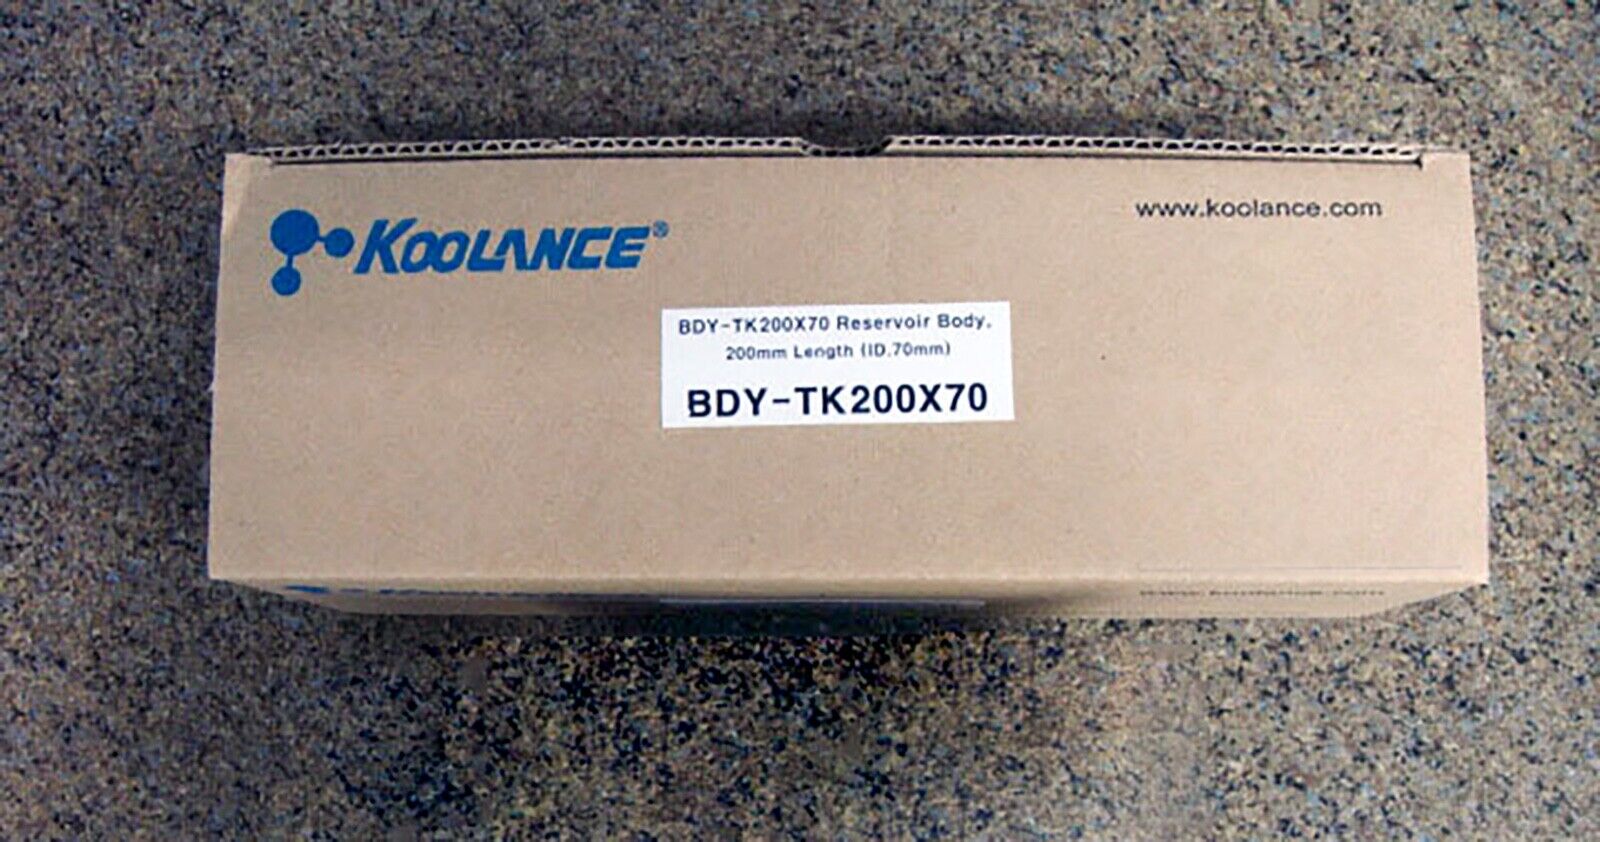 KOOLANCE Coolant Reservoir Body 200mm Length (ID. 70mm) BDY-TK200x70 200 x 70